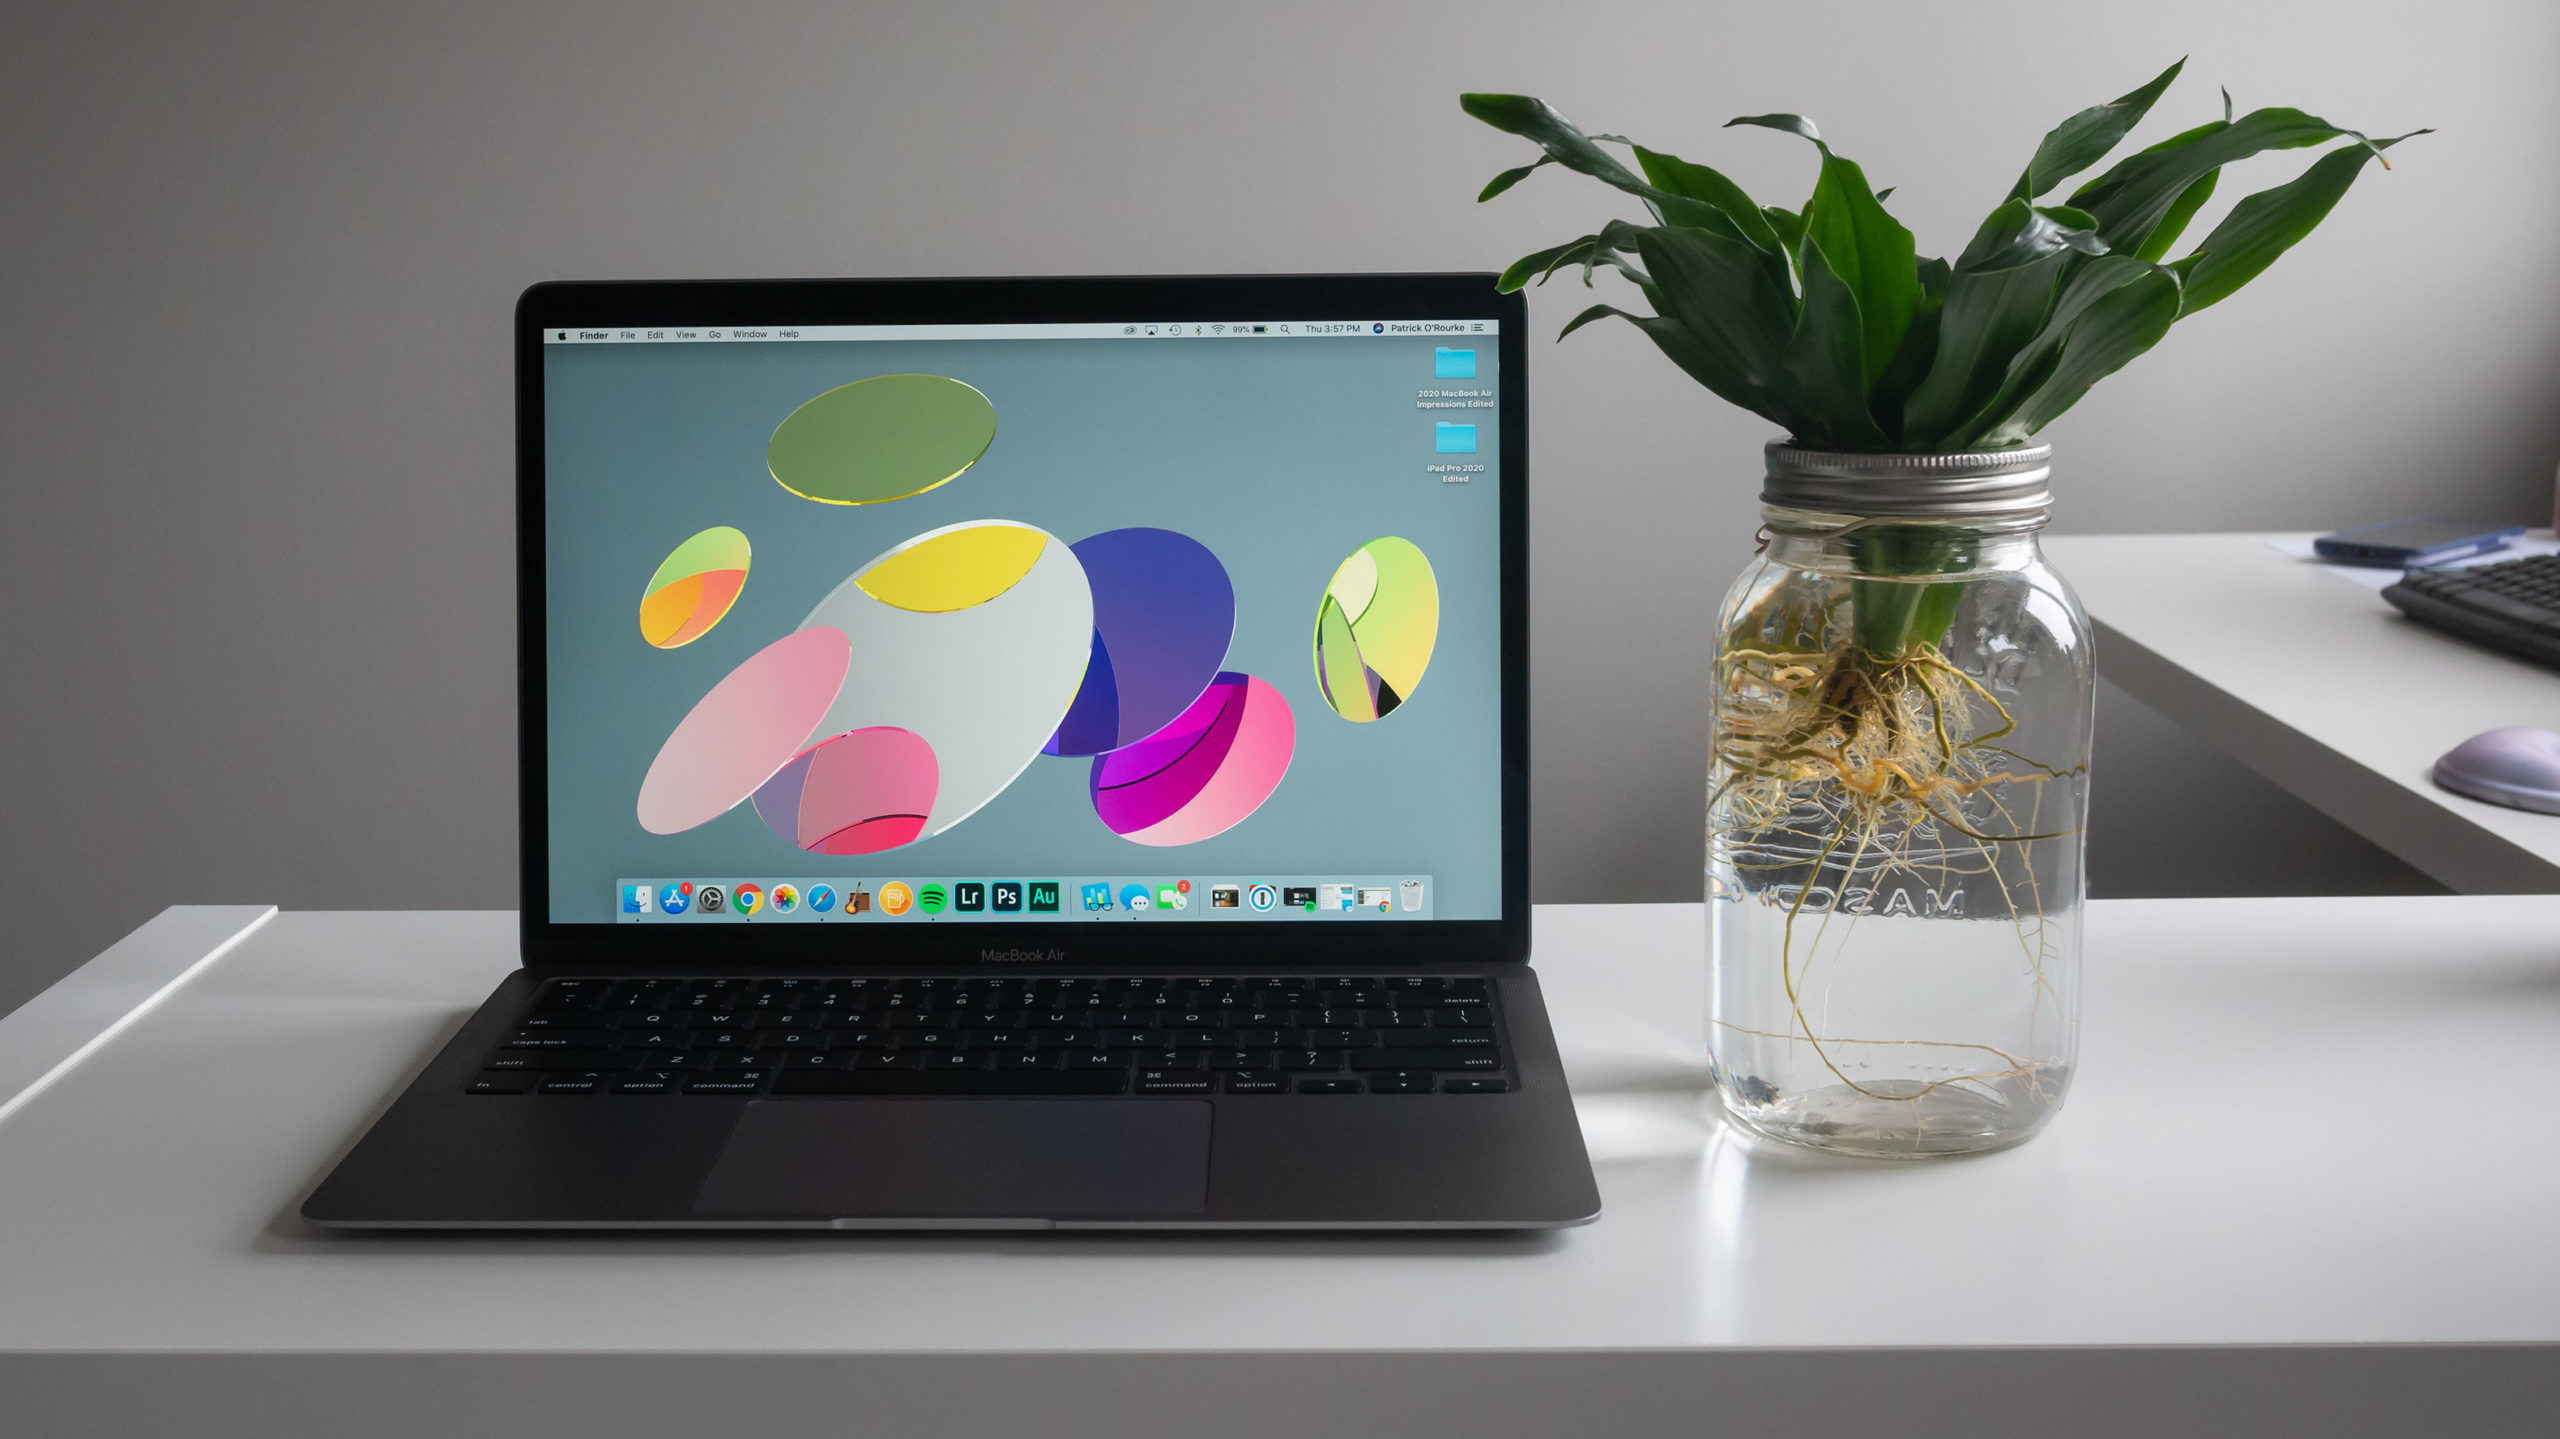 MacBook Air (2020) Review: Apple's laptop for everyone